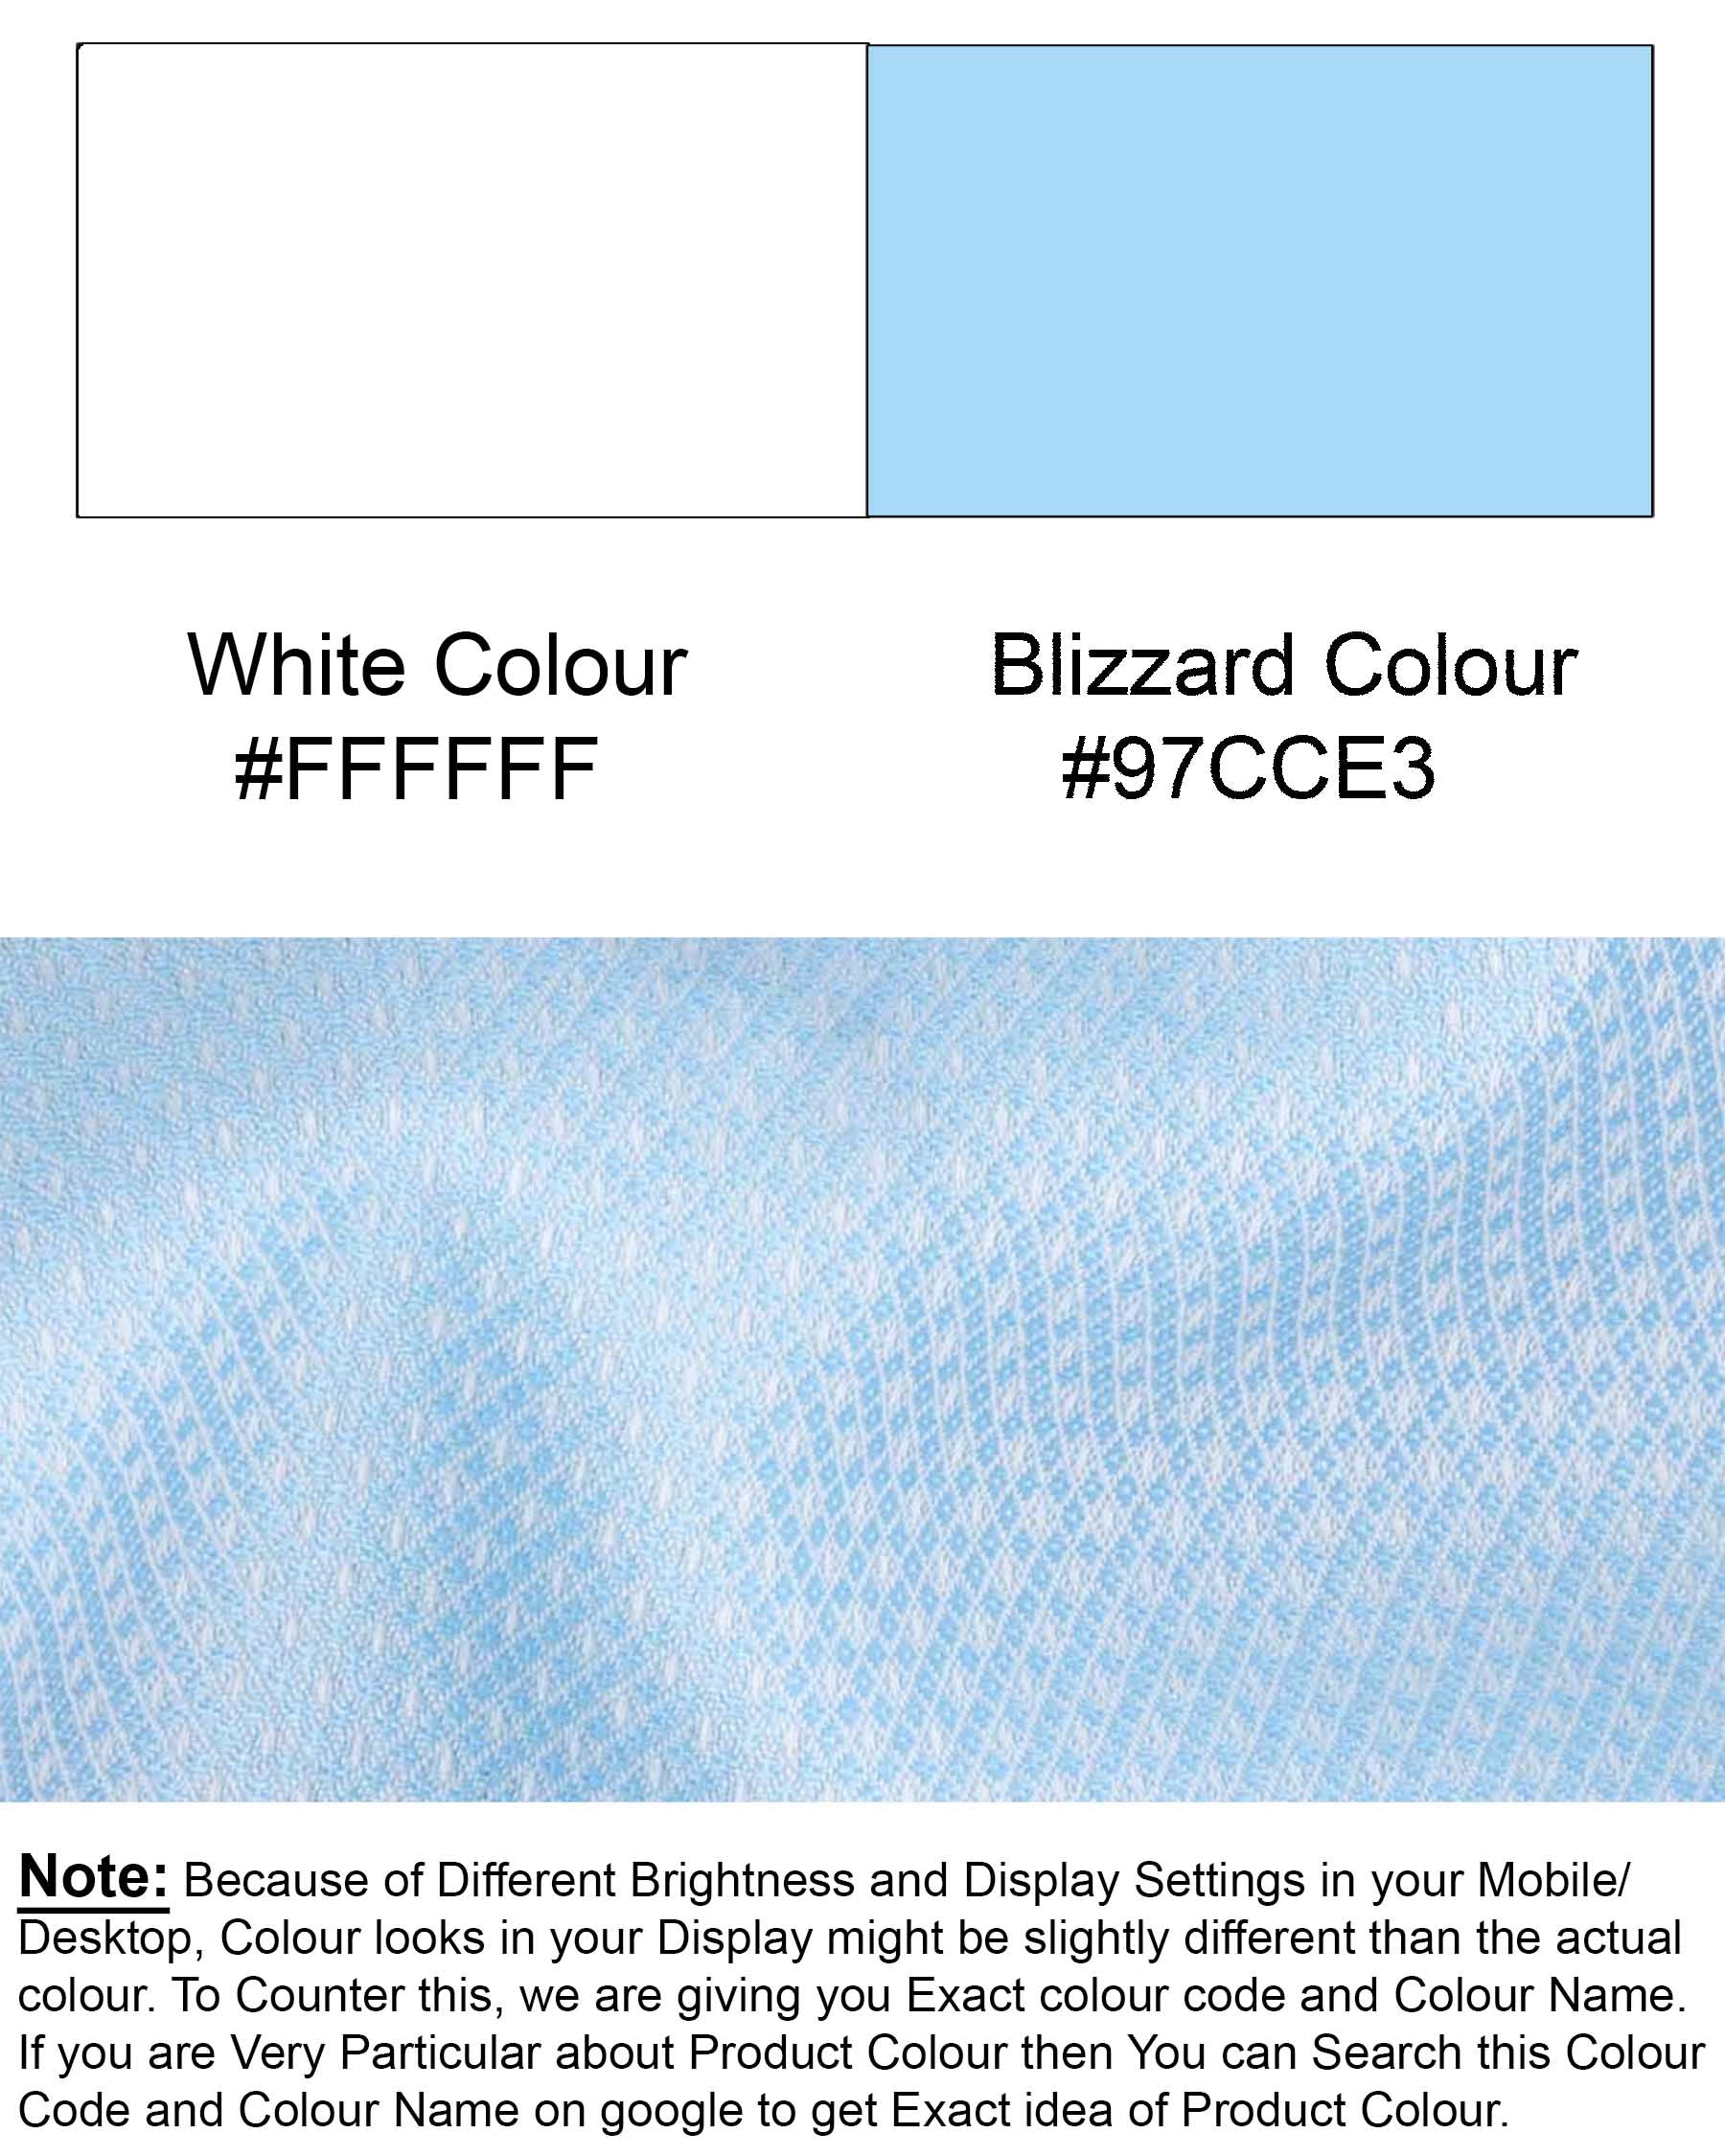 Blizzard Blue Dobby Textured Premium Giza Cotton Shirt 6188-CA-CP-38, 6188-CA-CP-H-38, 6188-CA-CP-39, 6188-CA-CP-H-39, 6188-CA-CP-40, 6188-CA-CP-H-40, 6188-CA-CP-42, 6188-CA-CP-H-42, 6188-CA-CP-44, 6188-CA-CP-H-44, 6188-CA-CP-46, 6188-CA-CP-H-46, 6188-CA-CP-48, 6188-CA-CP-H-48, 6188-CA-CP-50, 6188-CA-CP-H-50, 6188-CA-CP-52, 6188-CA-CP-H-52